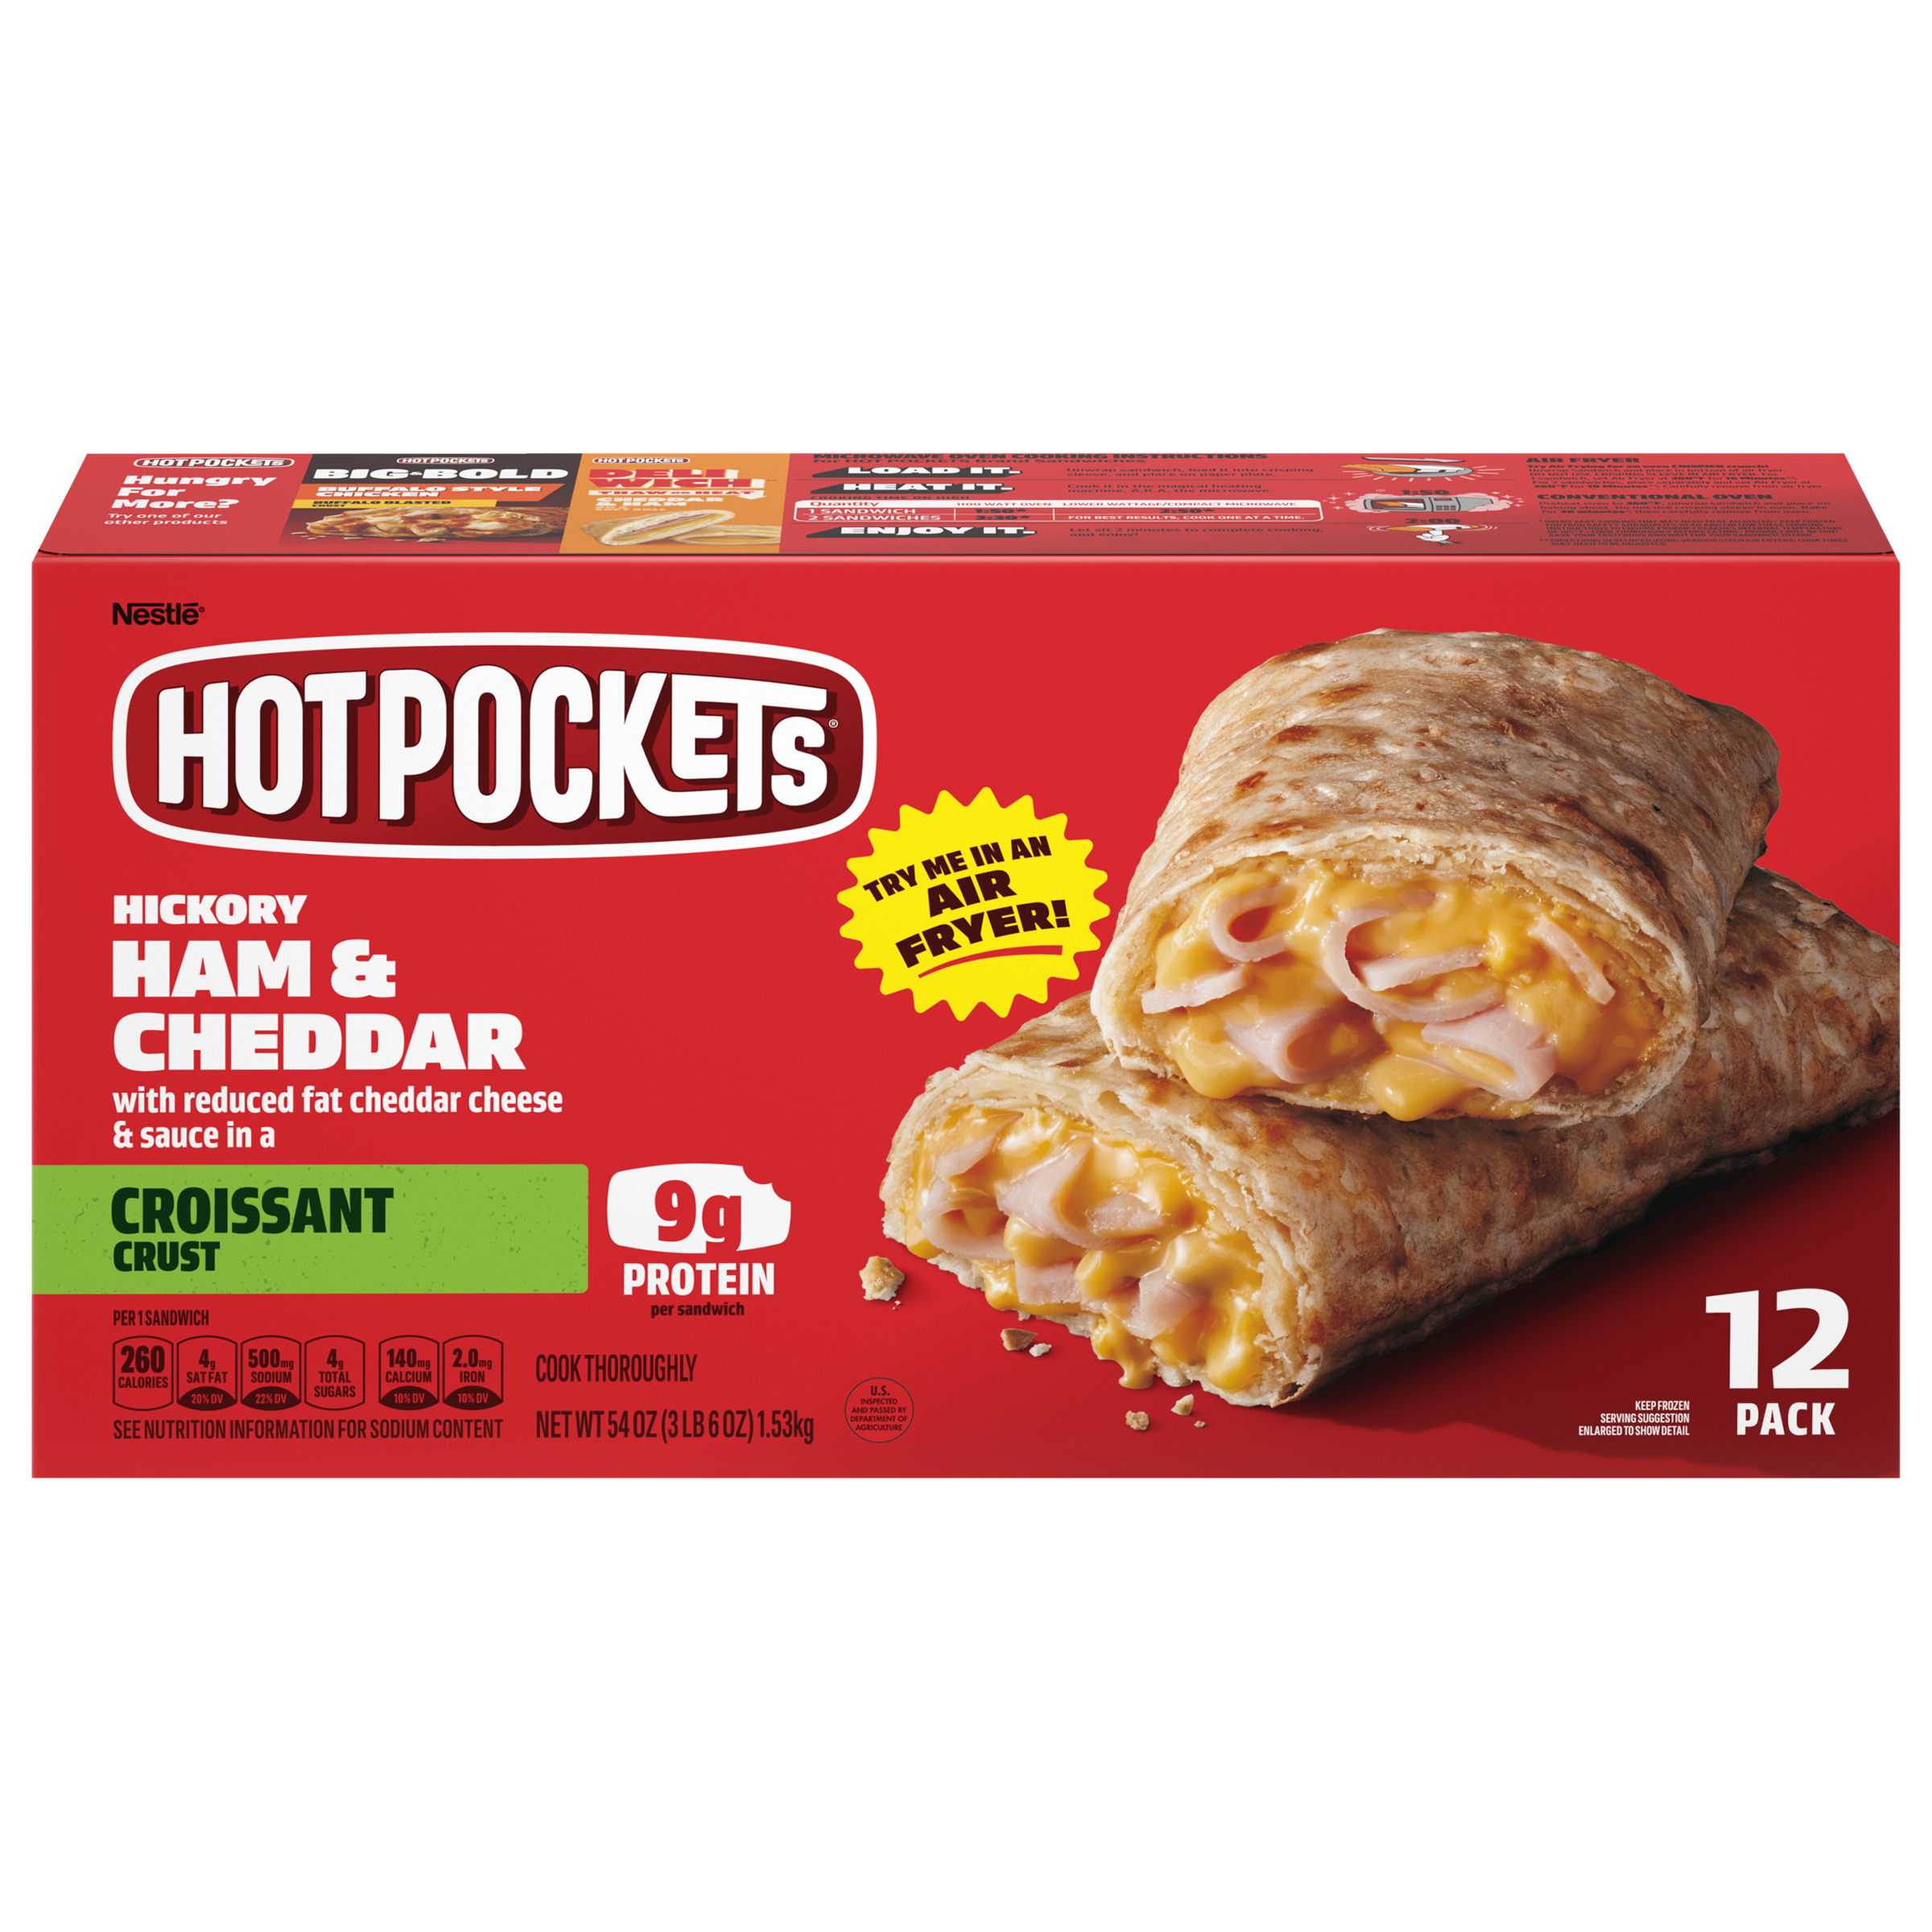 HOT POCKETS Croissant Crust Hickory Ham & Cheddar (12 Pack) 4 units per case 54.0 oz